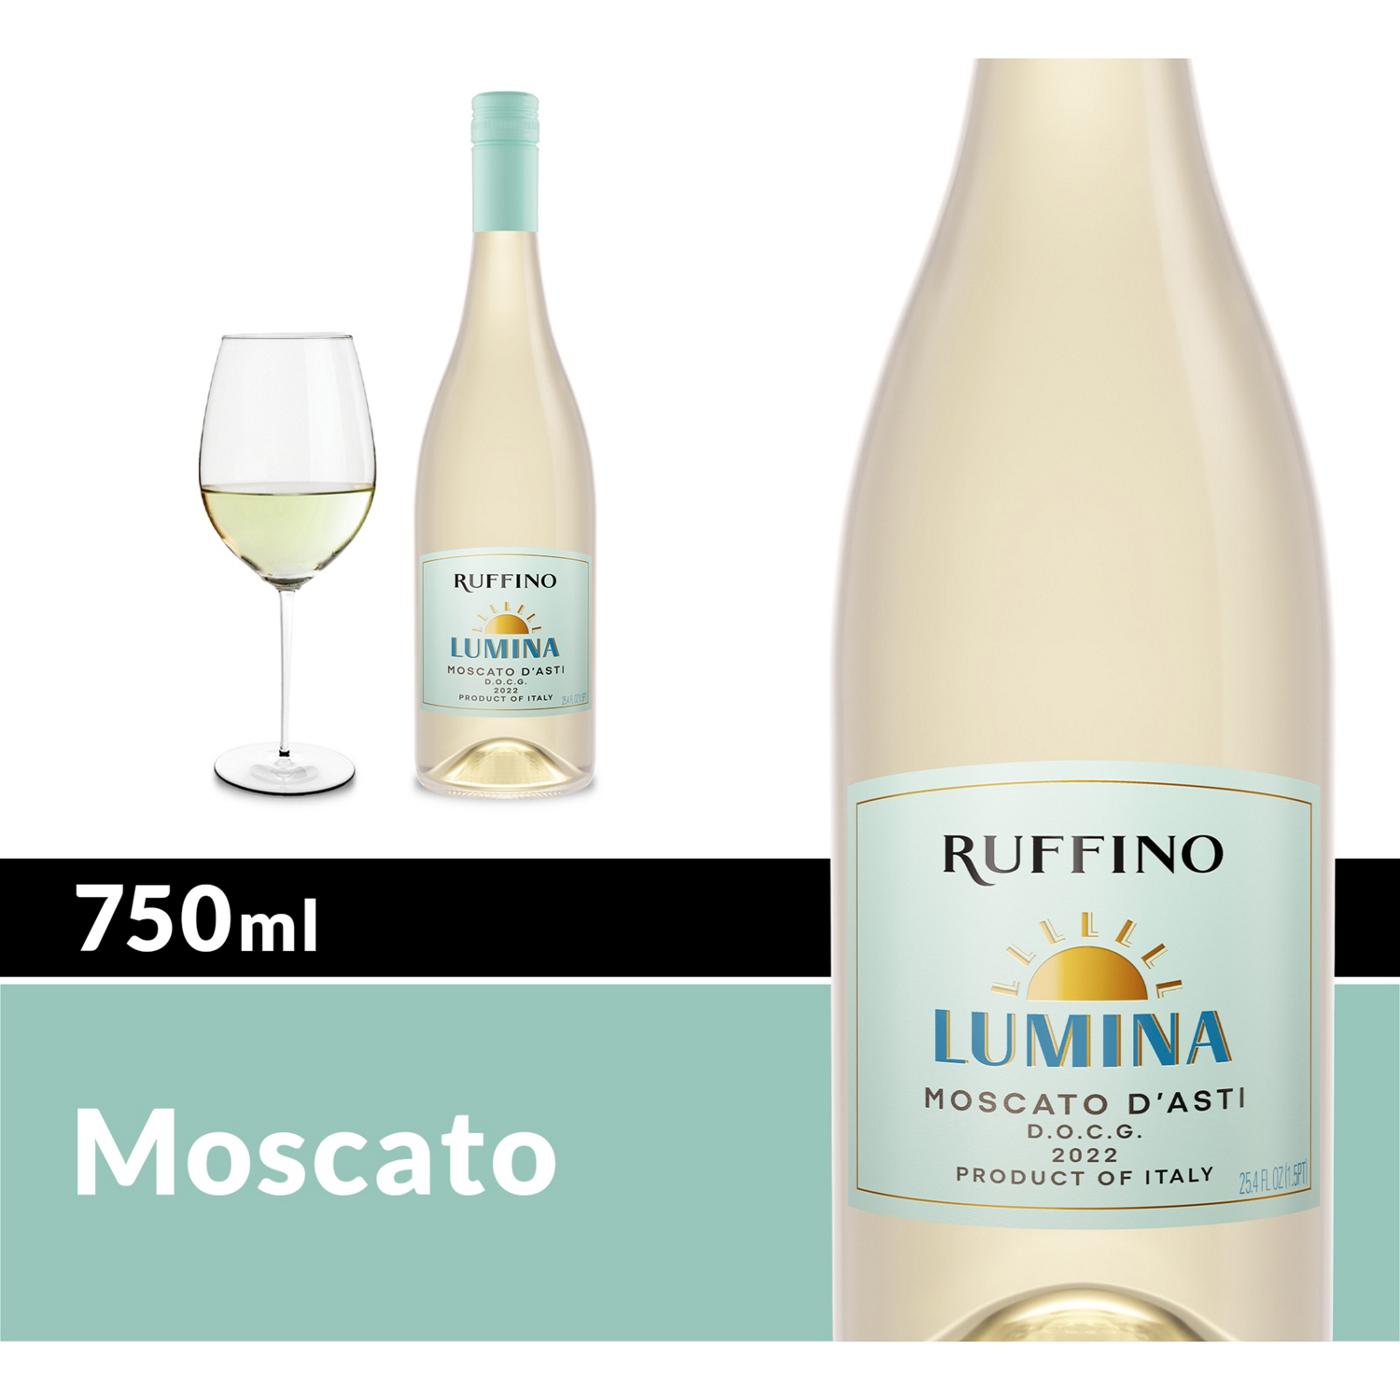 Ruffino Lumina DOCG Moscato d'Asti, Italian White Wine 750 mL Bottle; image 6 of 6